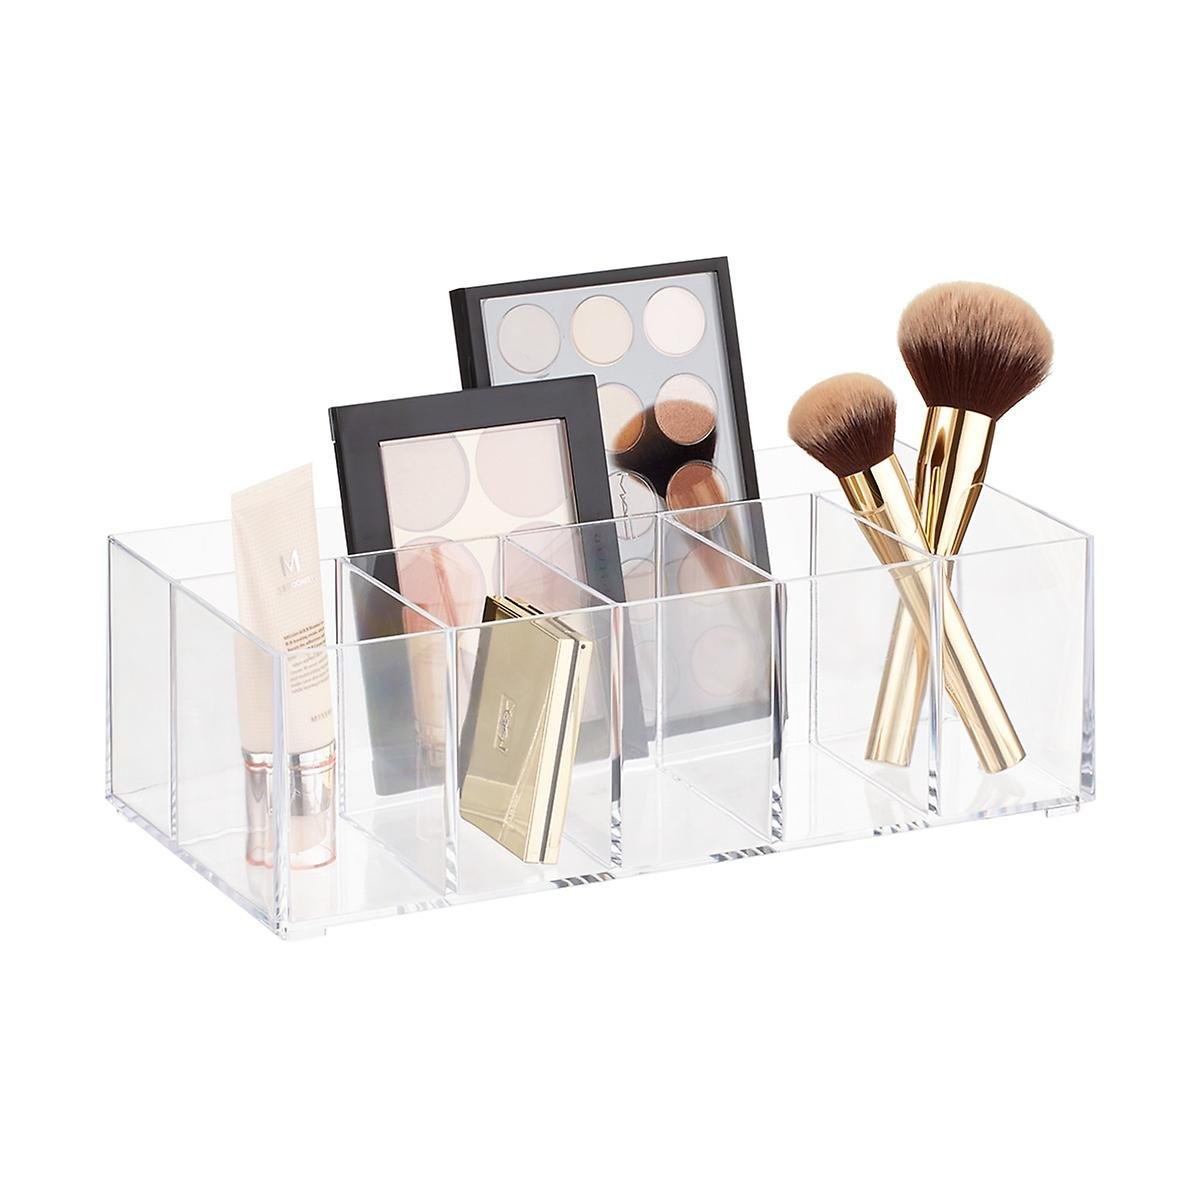 InterDesign Clarity Cosmetics & Vanity Organizer - Image 0